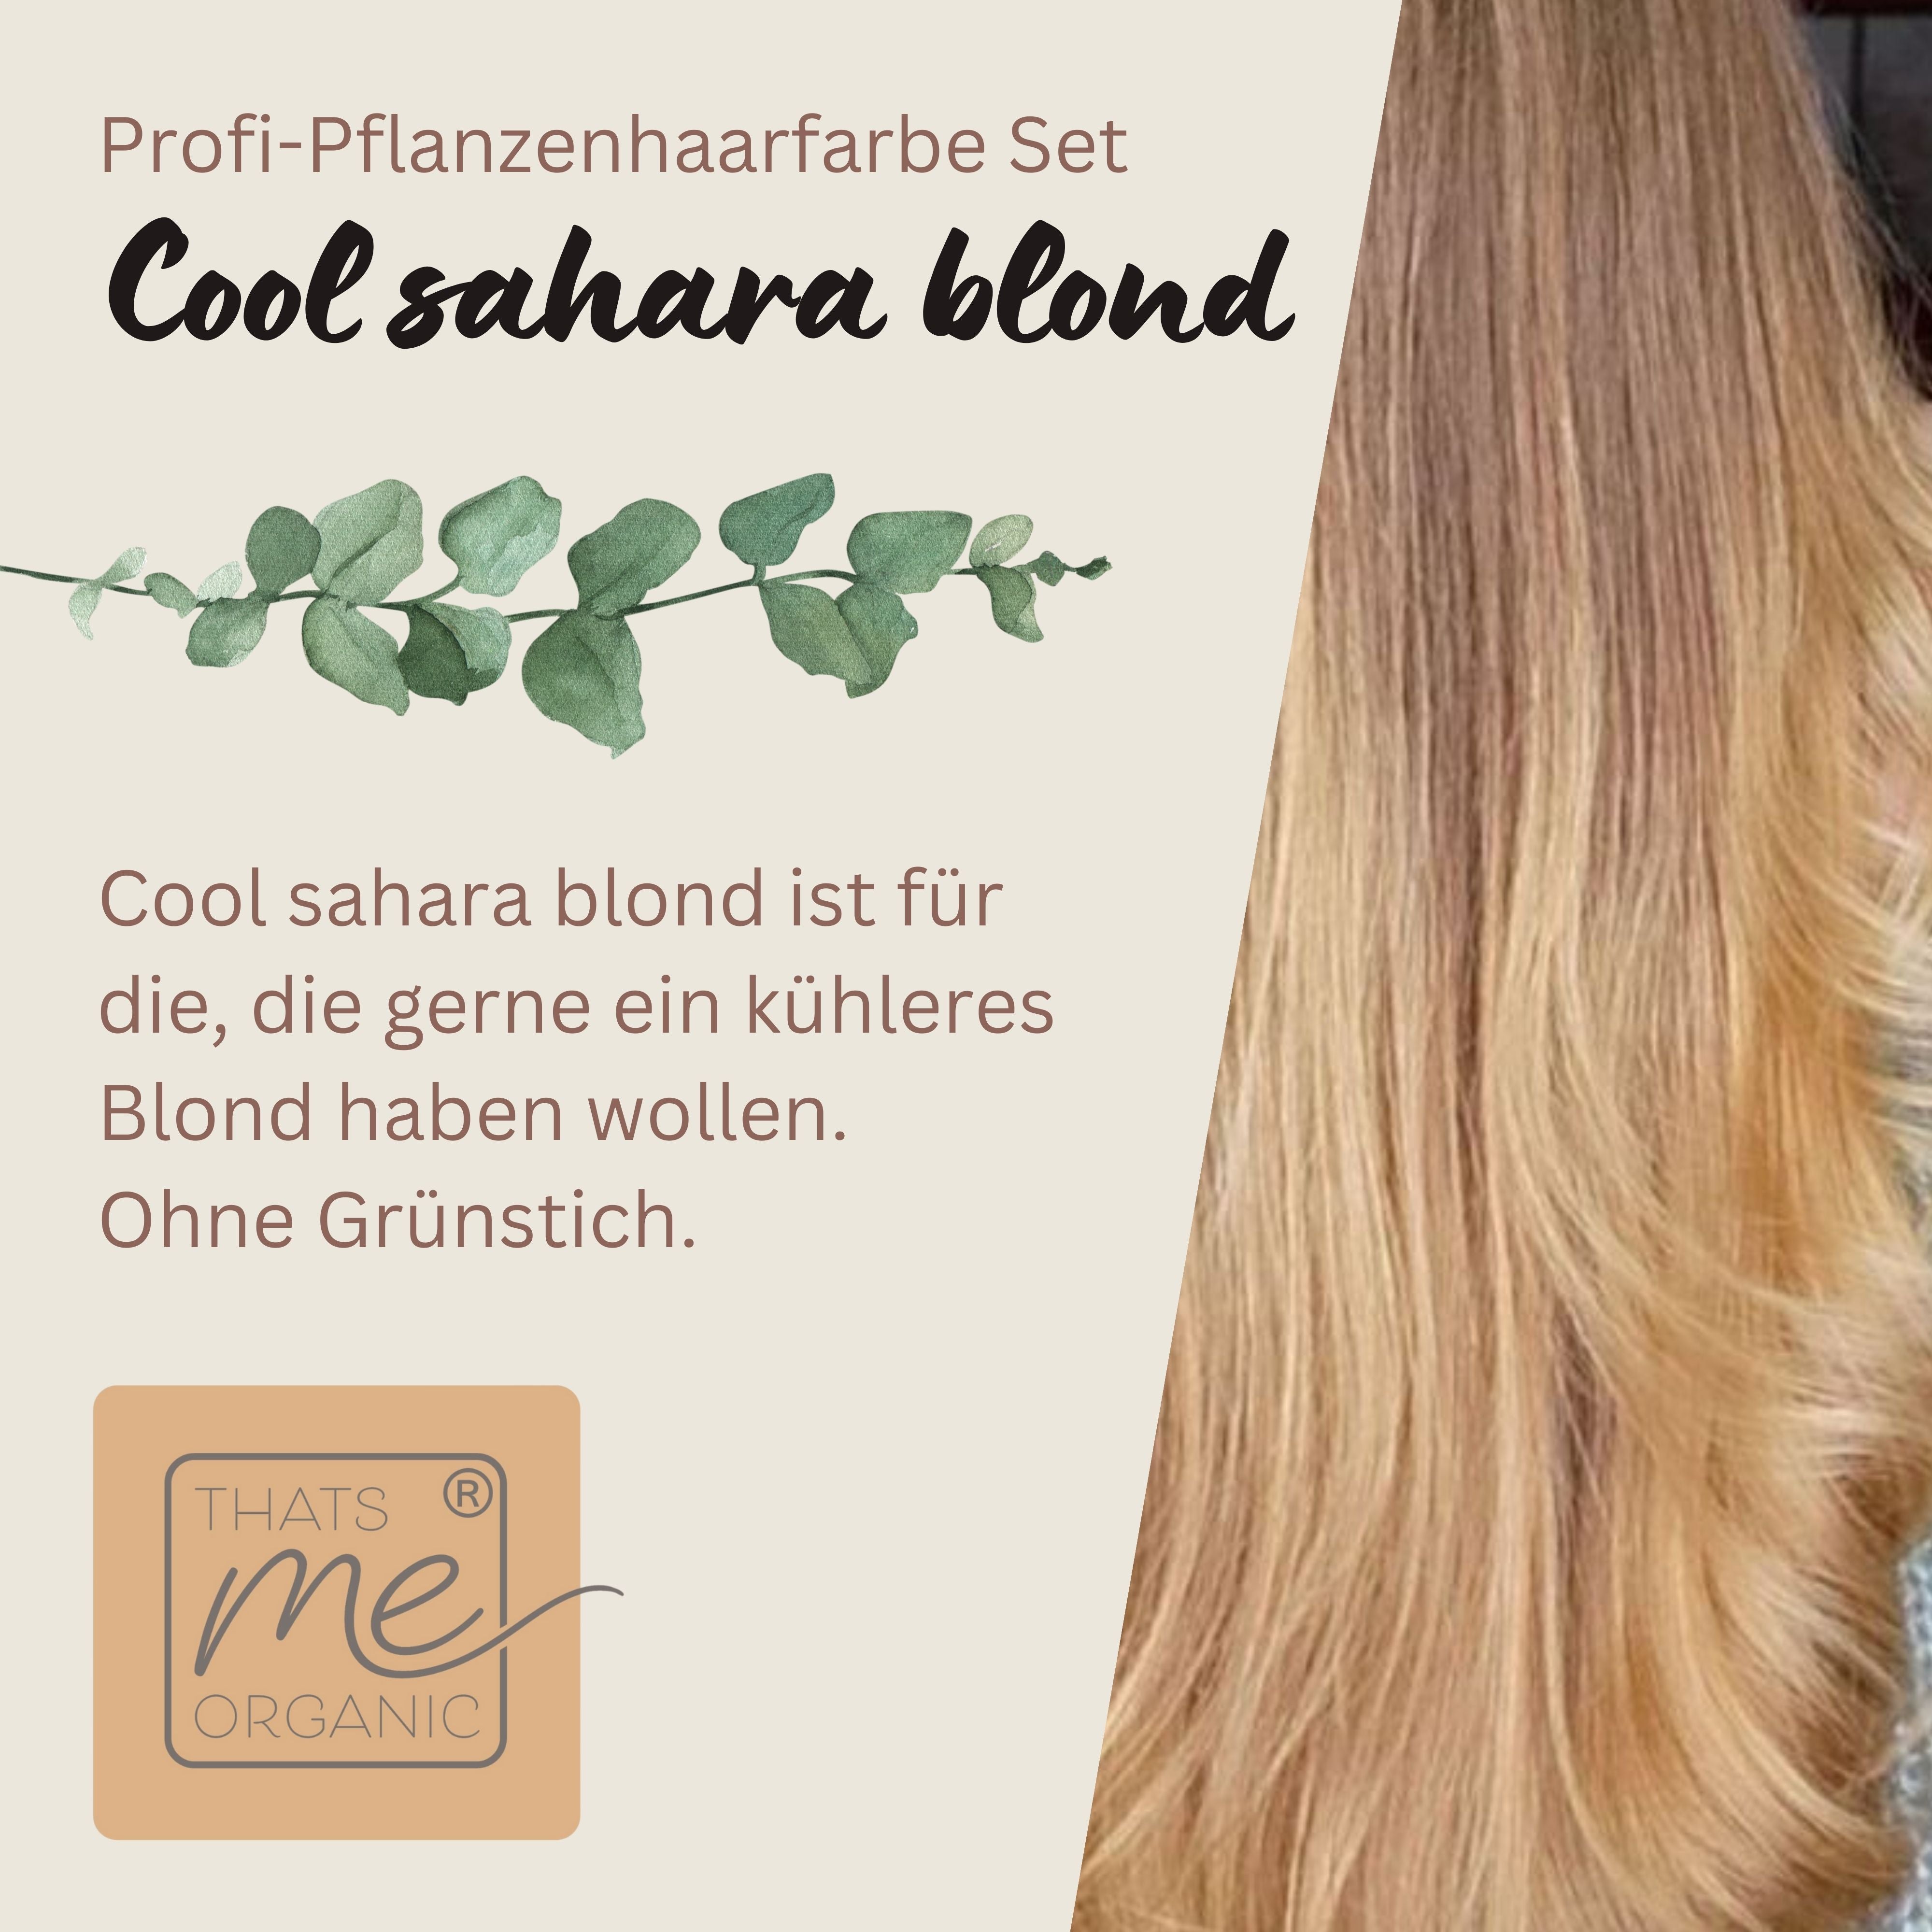 Profi-Pflanzenhaarfarbe kühles Sahara-Blond "cool sahara blond in 2-Steps" 2x 90g Nachfüllpacks